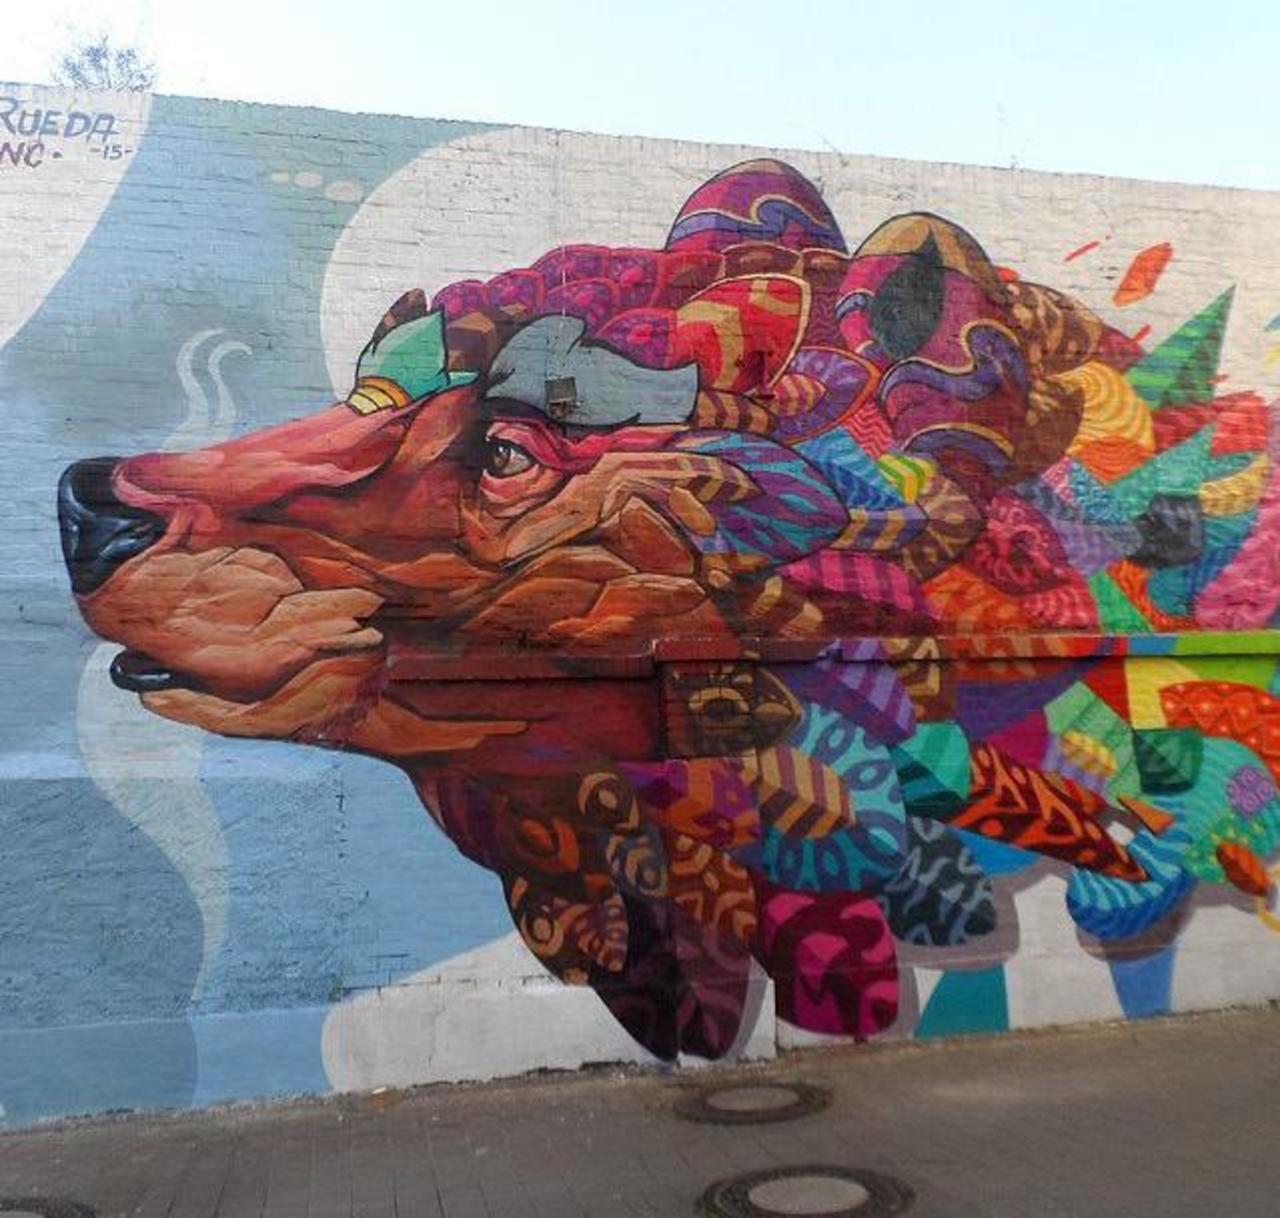 RT @jerome_coumet: Farid Rueda
#art #graffiti #mural #streetart http://t.co/8Sej7ZUB9k
Via @GoogleStreetArt